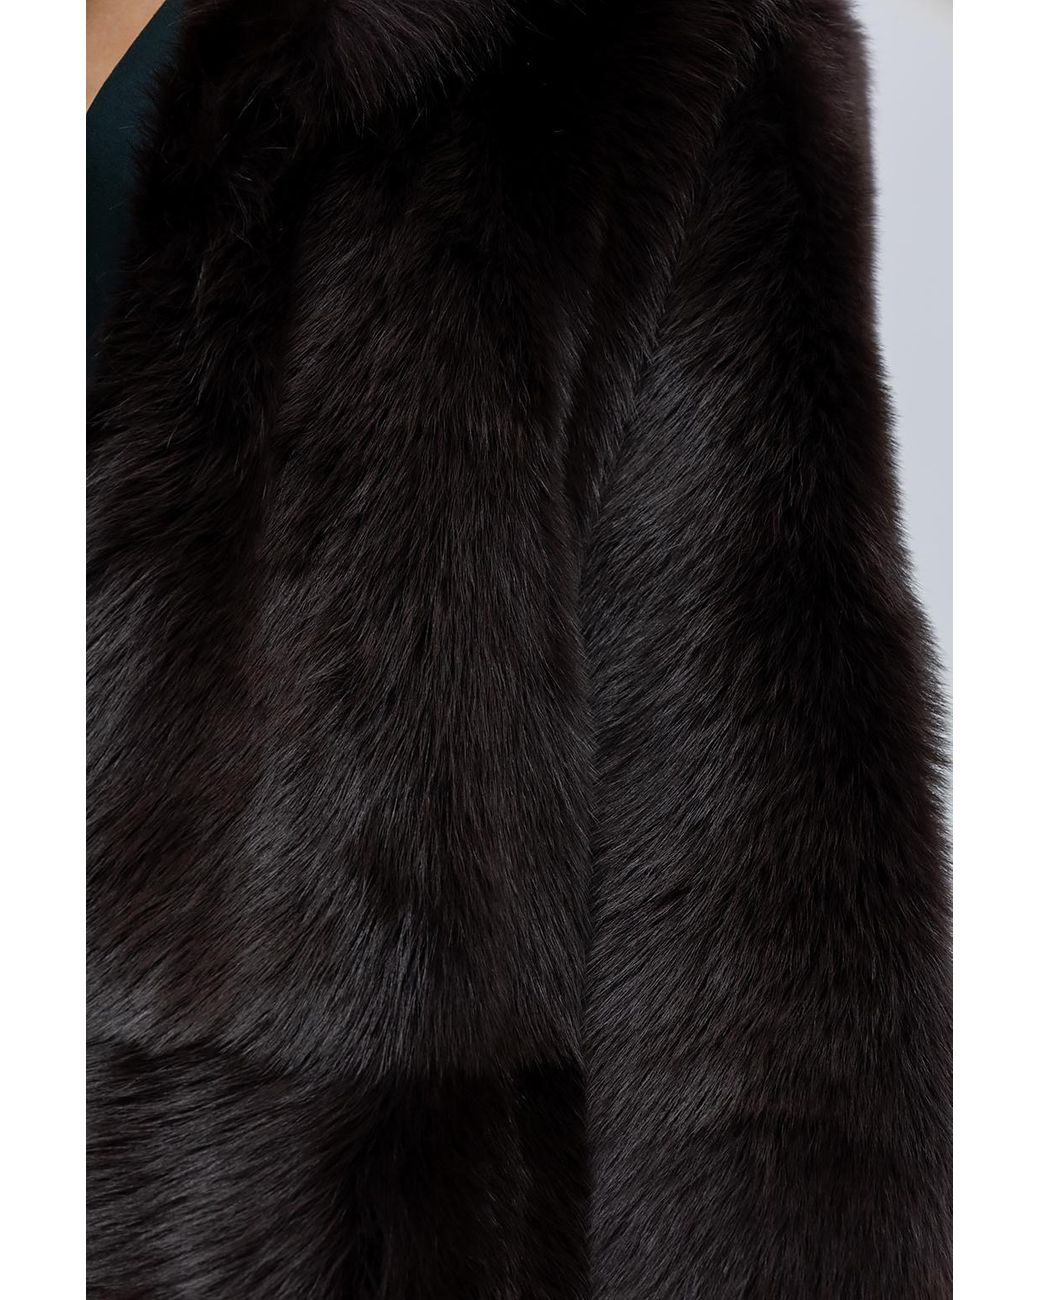 Bottega Veneta Cropped Fur Jacket in Black Womens Clothing Jackets Fur jackets 